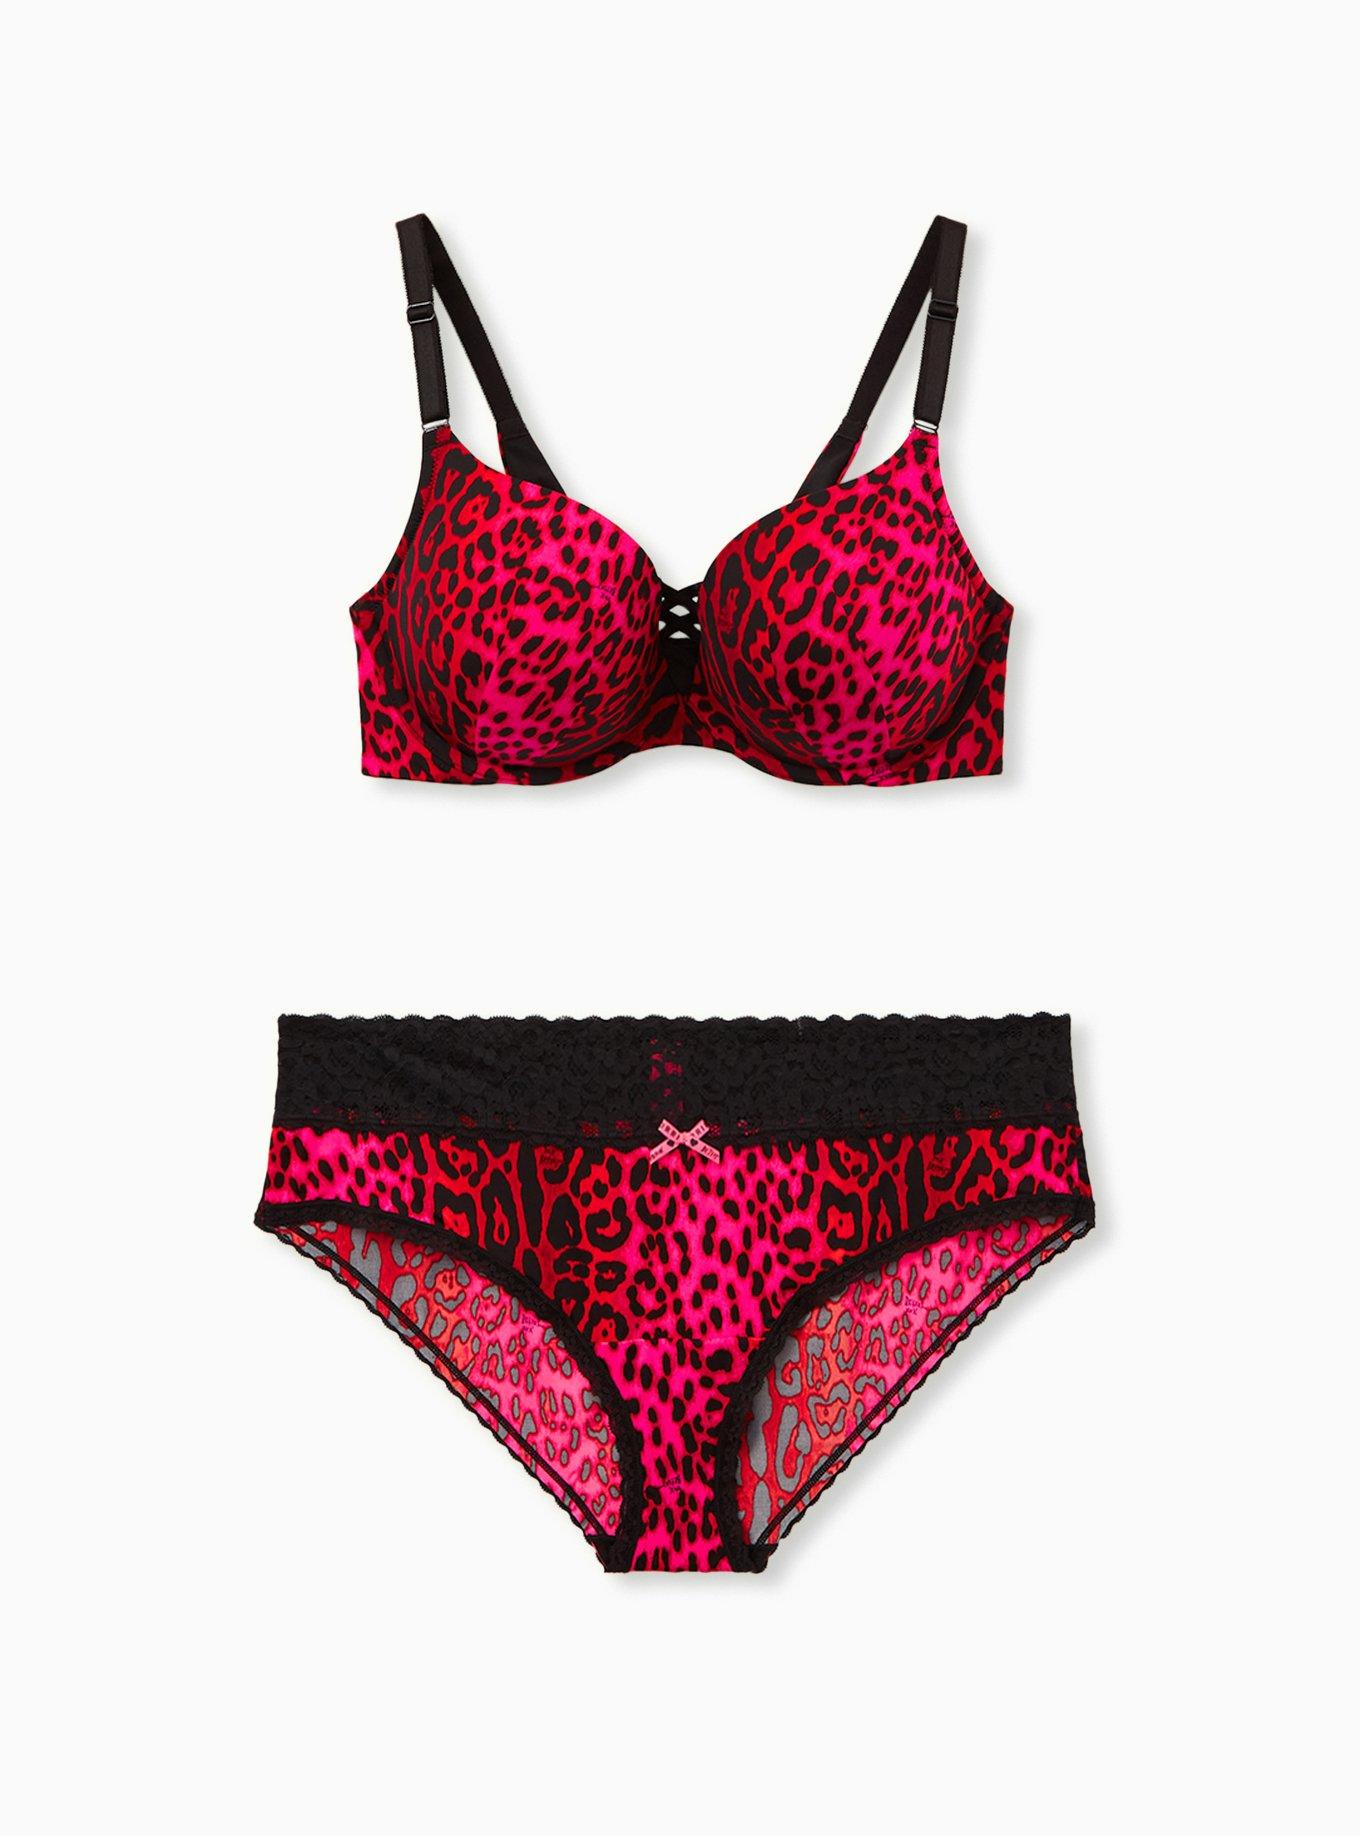 Leopard print pink/black underwire push-up Bra- Satin bow - Size 28A